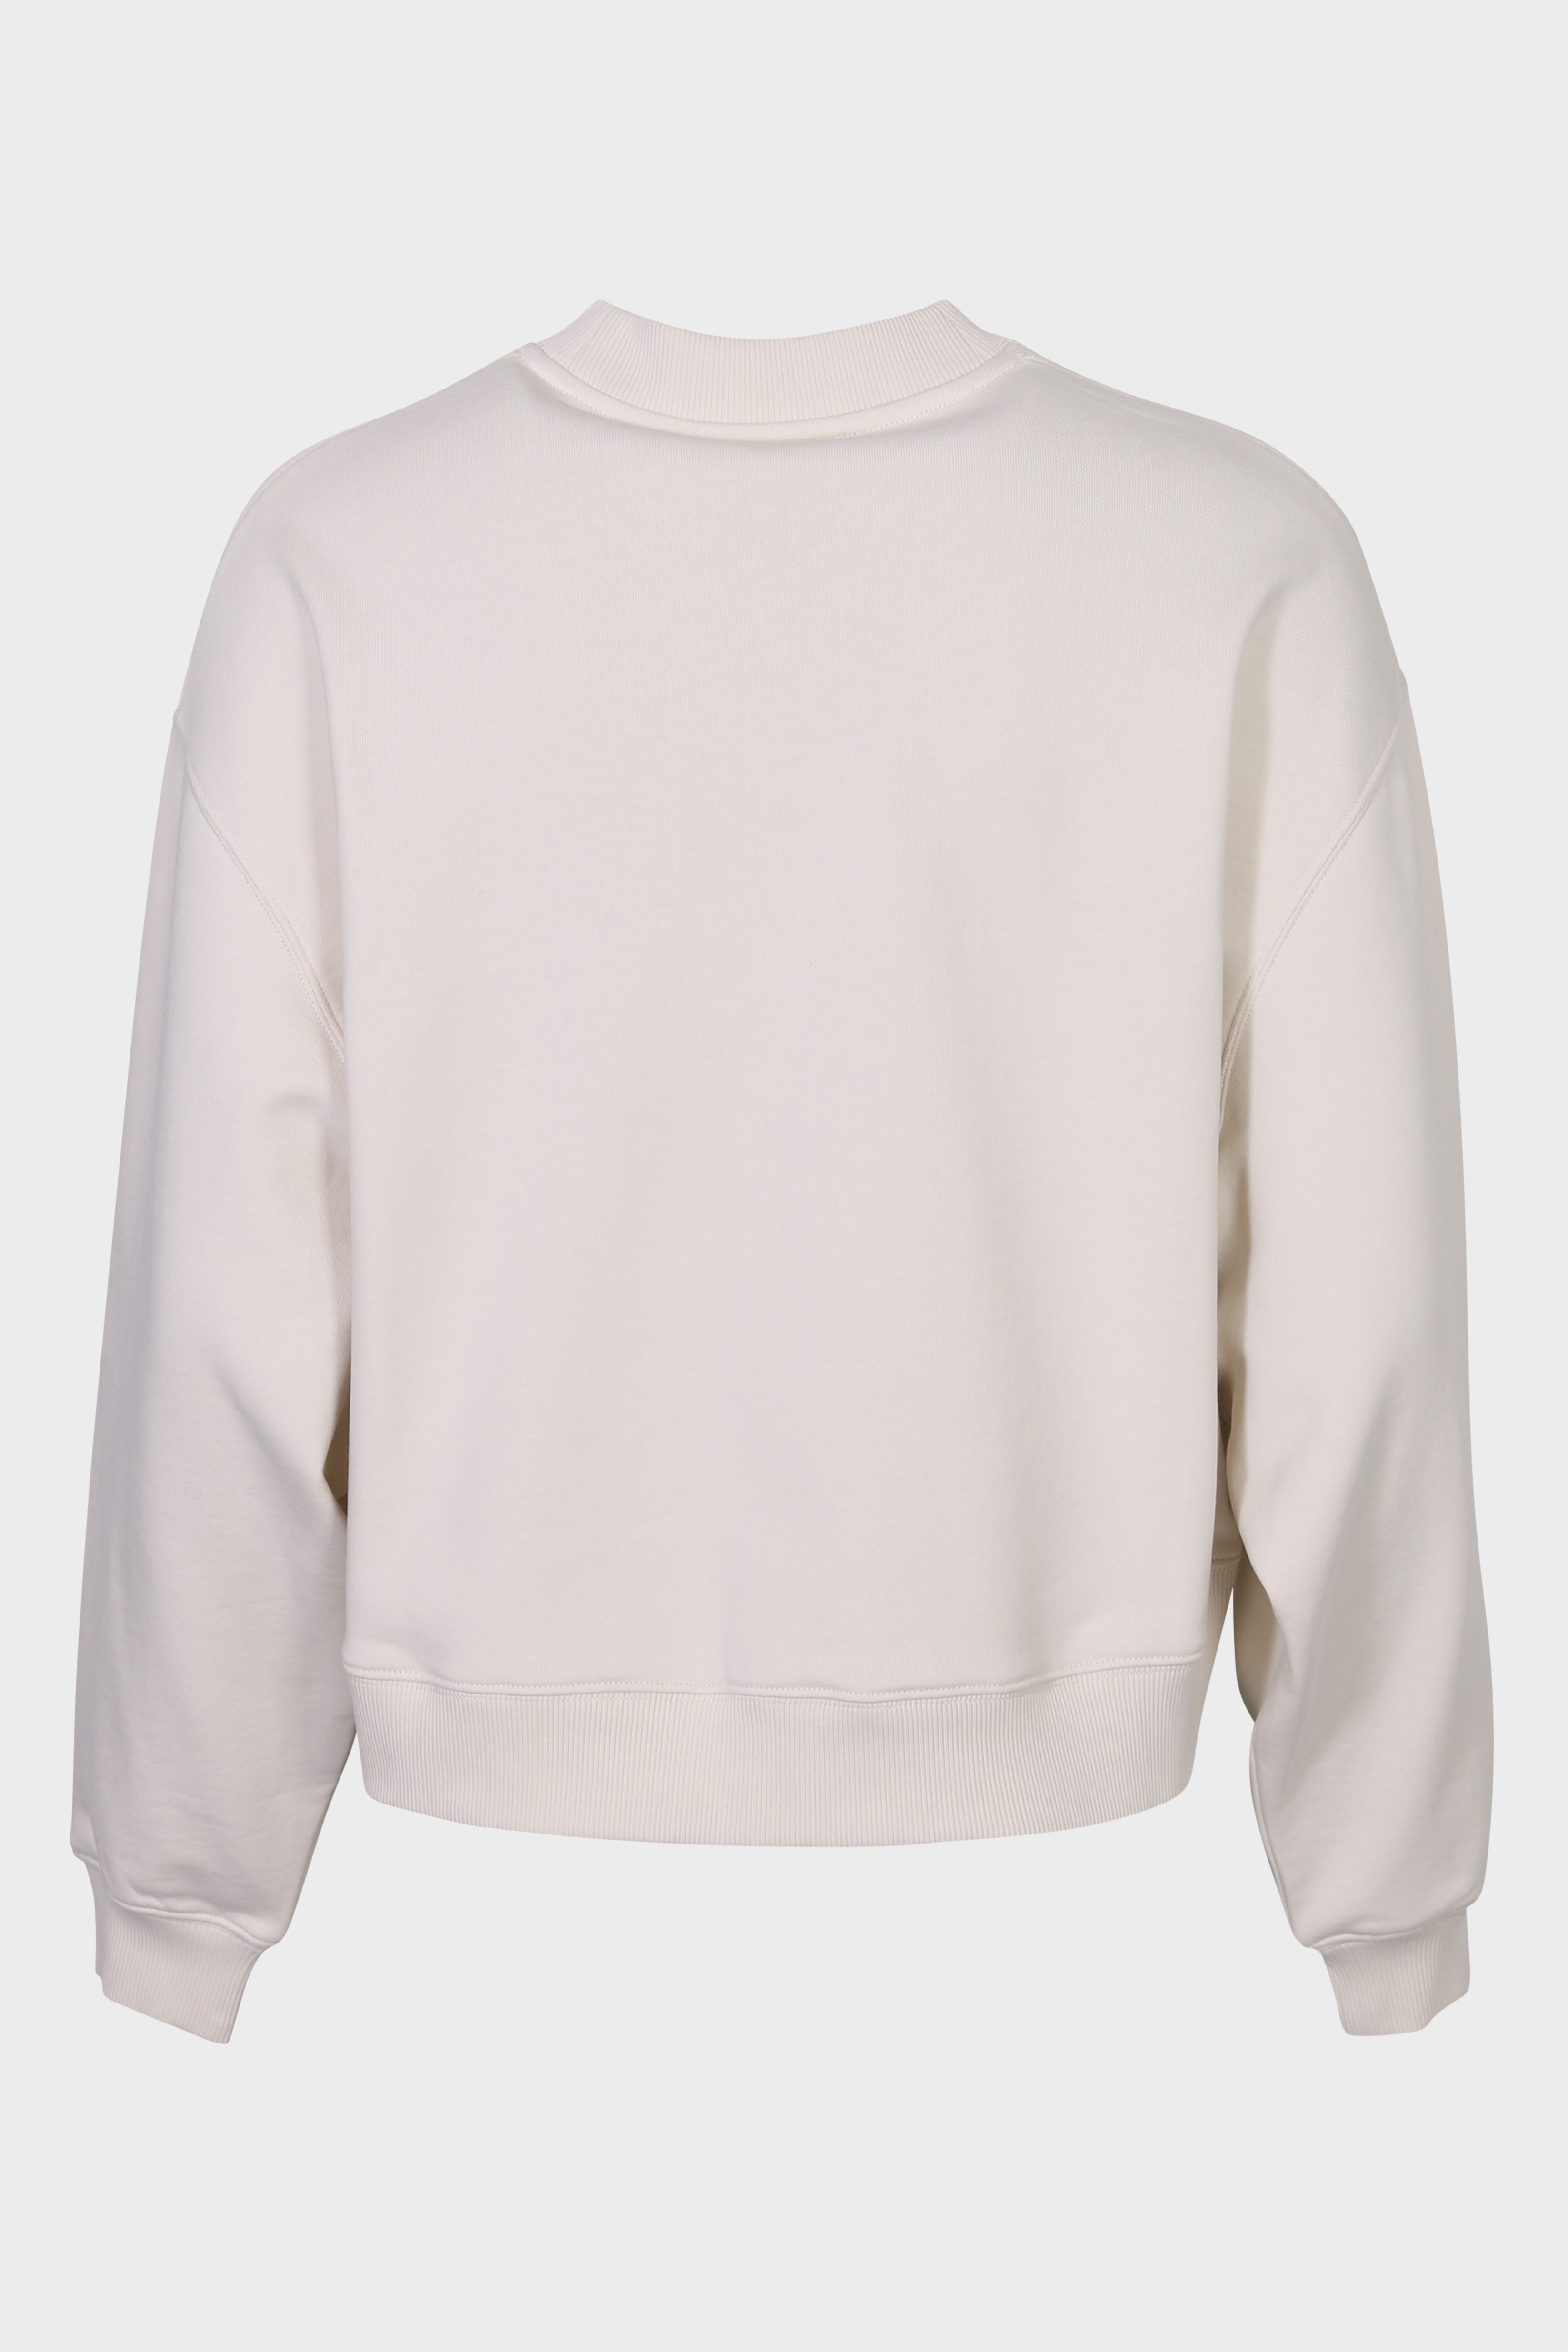 AXEL ARIGATO Legacy Sweatshirt in Off White M